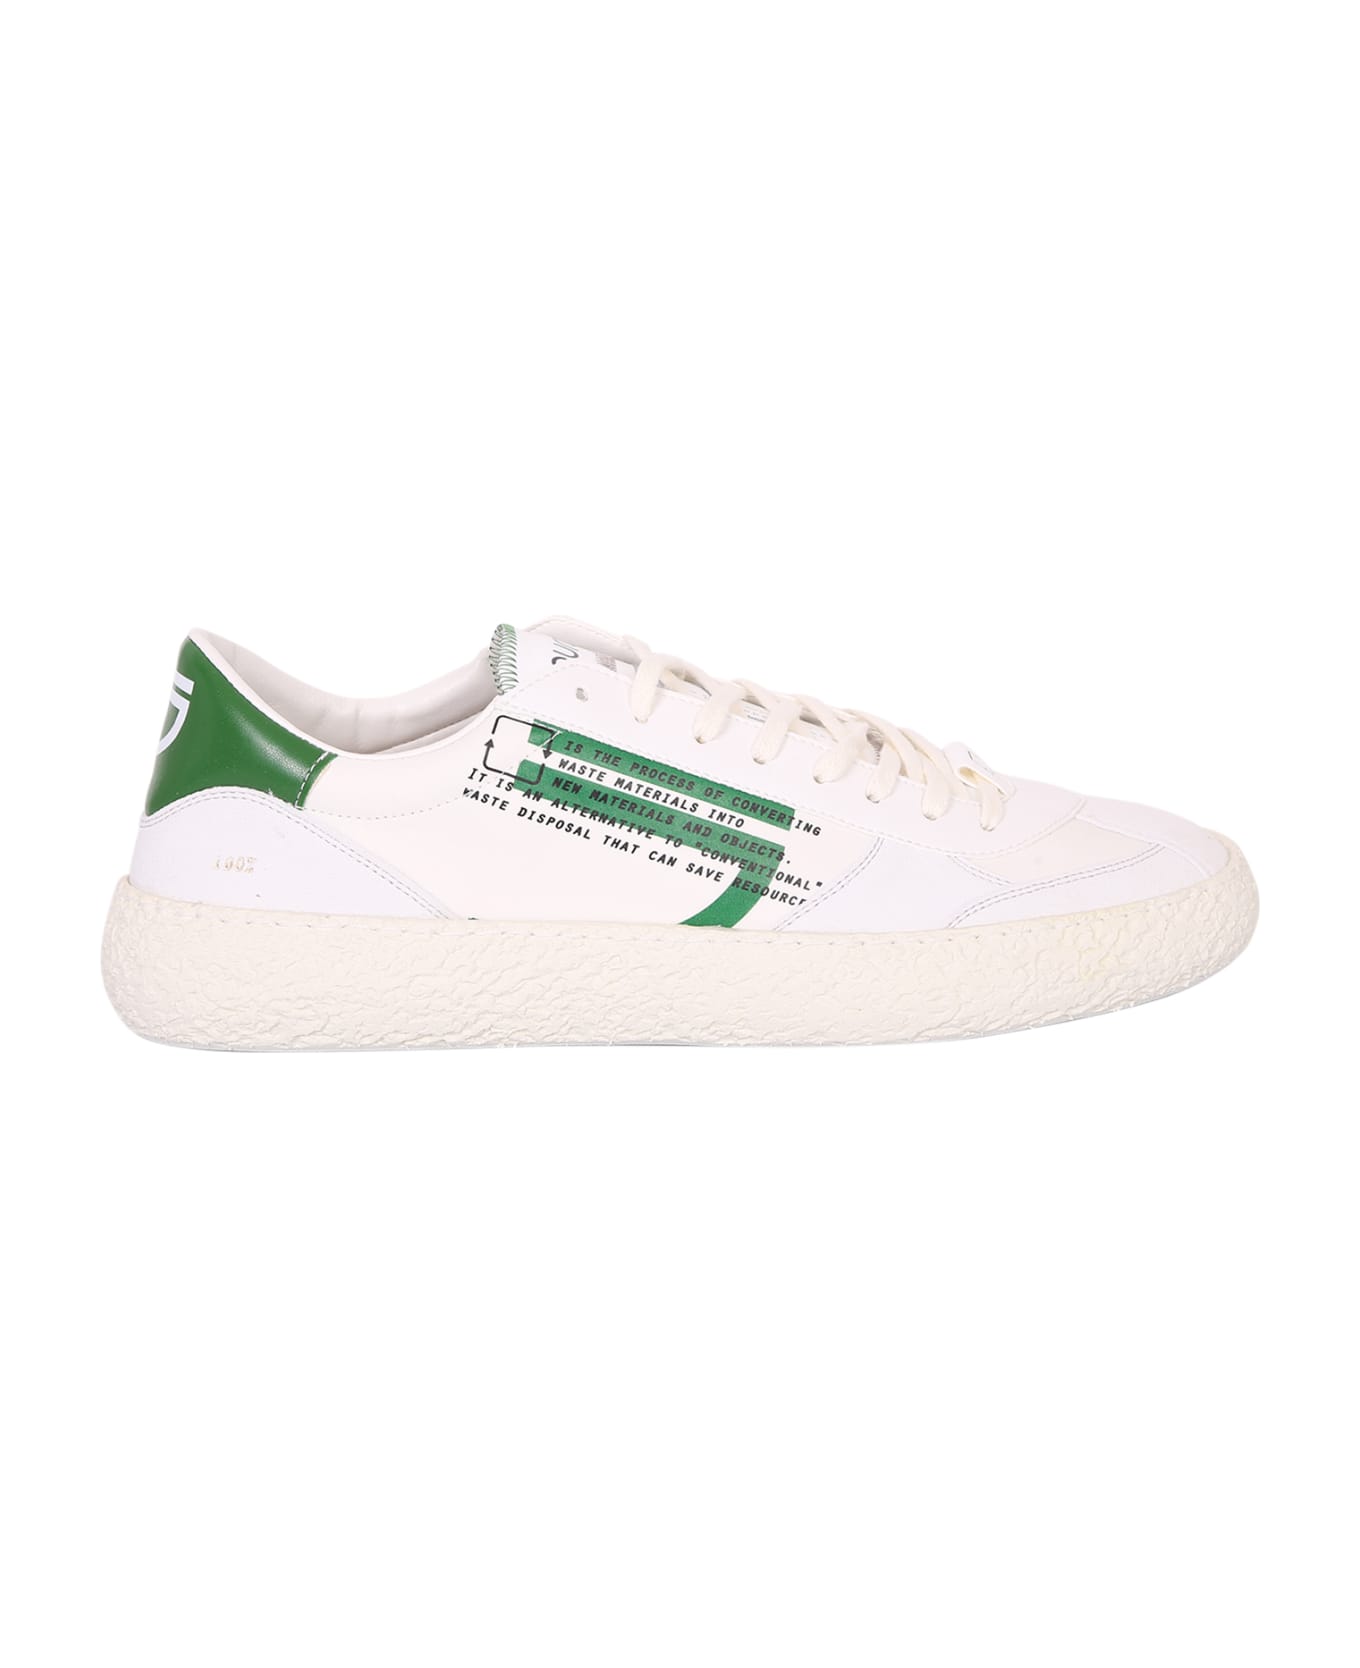 Puraai Erba Low-top Sneakers - White